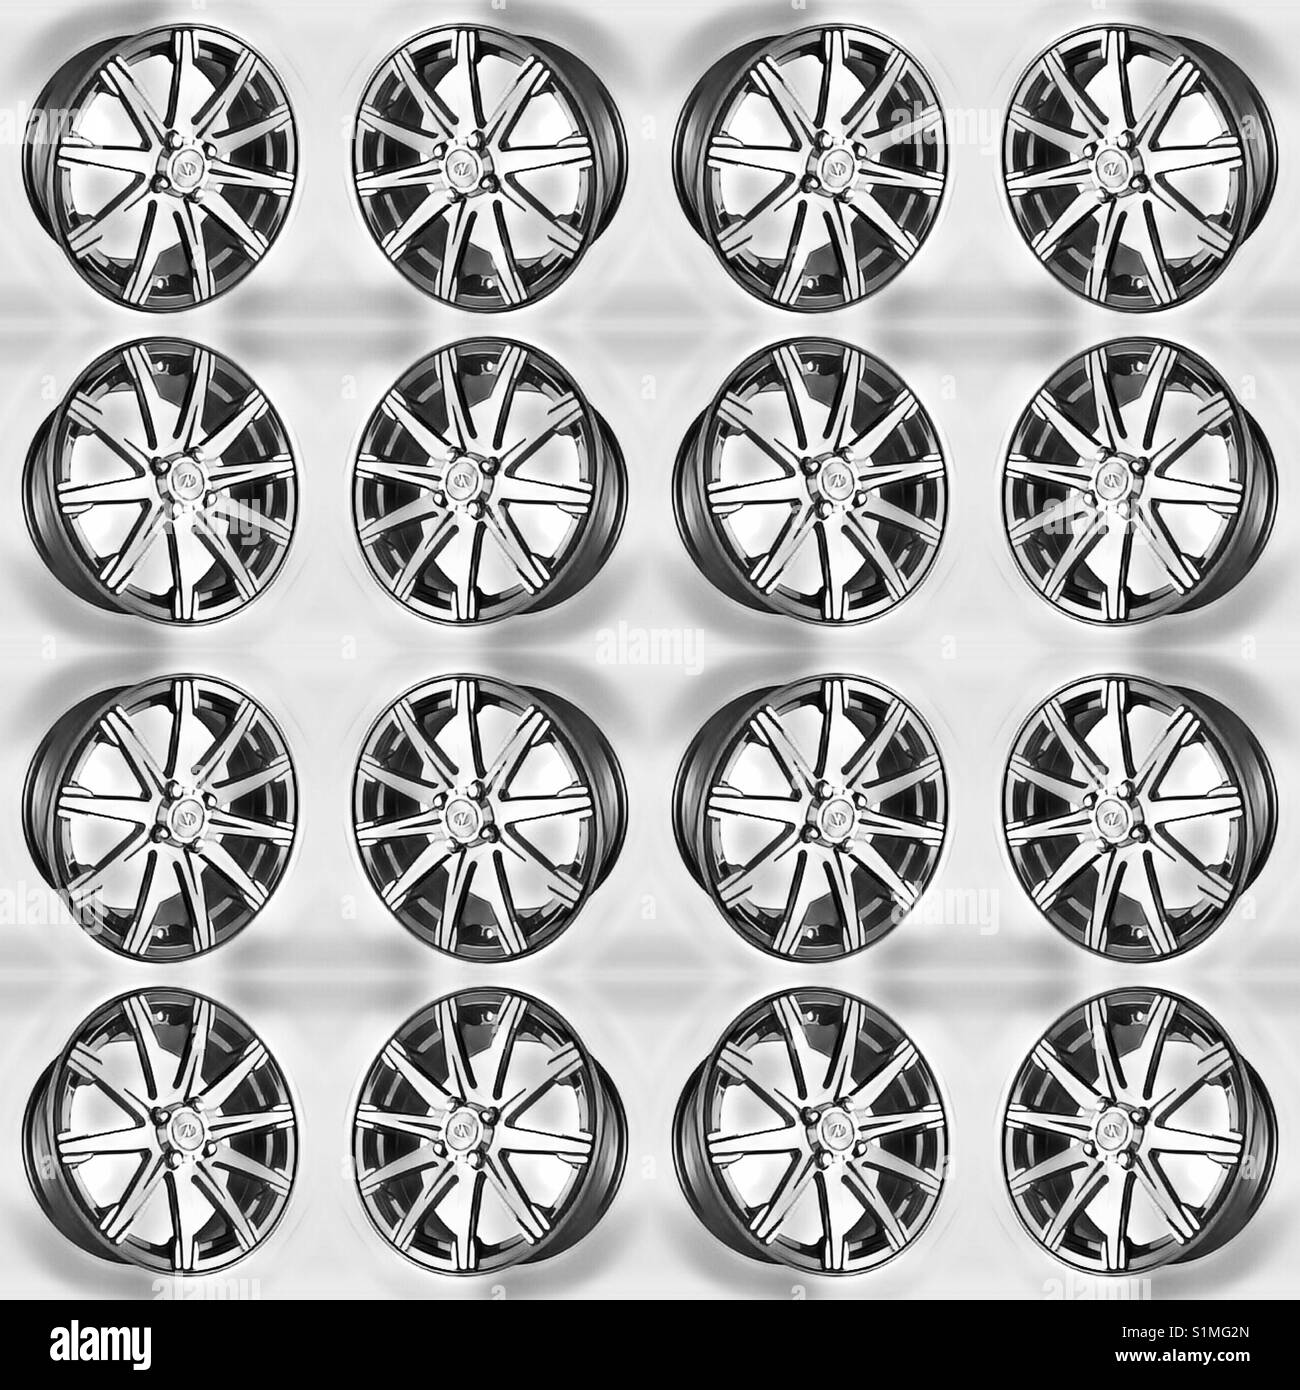 Rims and wheels Stock Photo